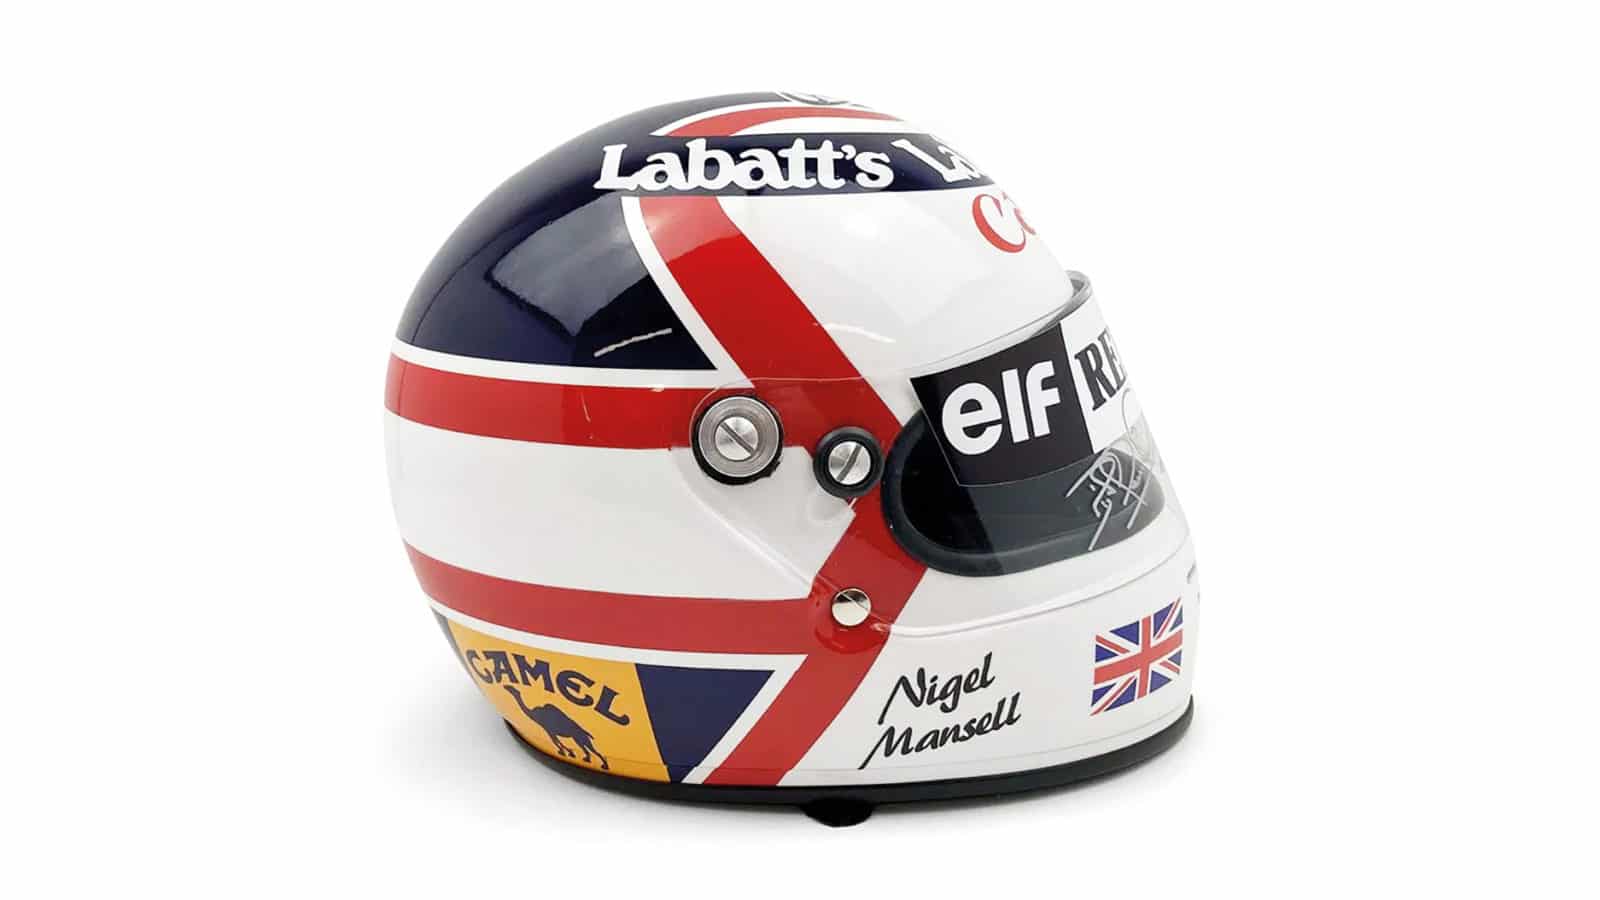 Nigel Mansell’s helmet